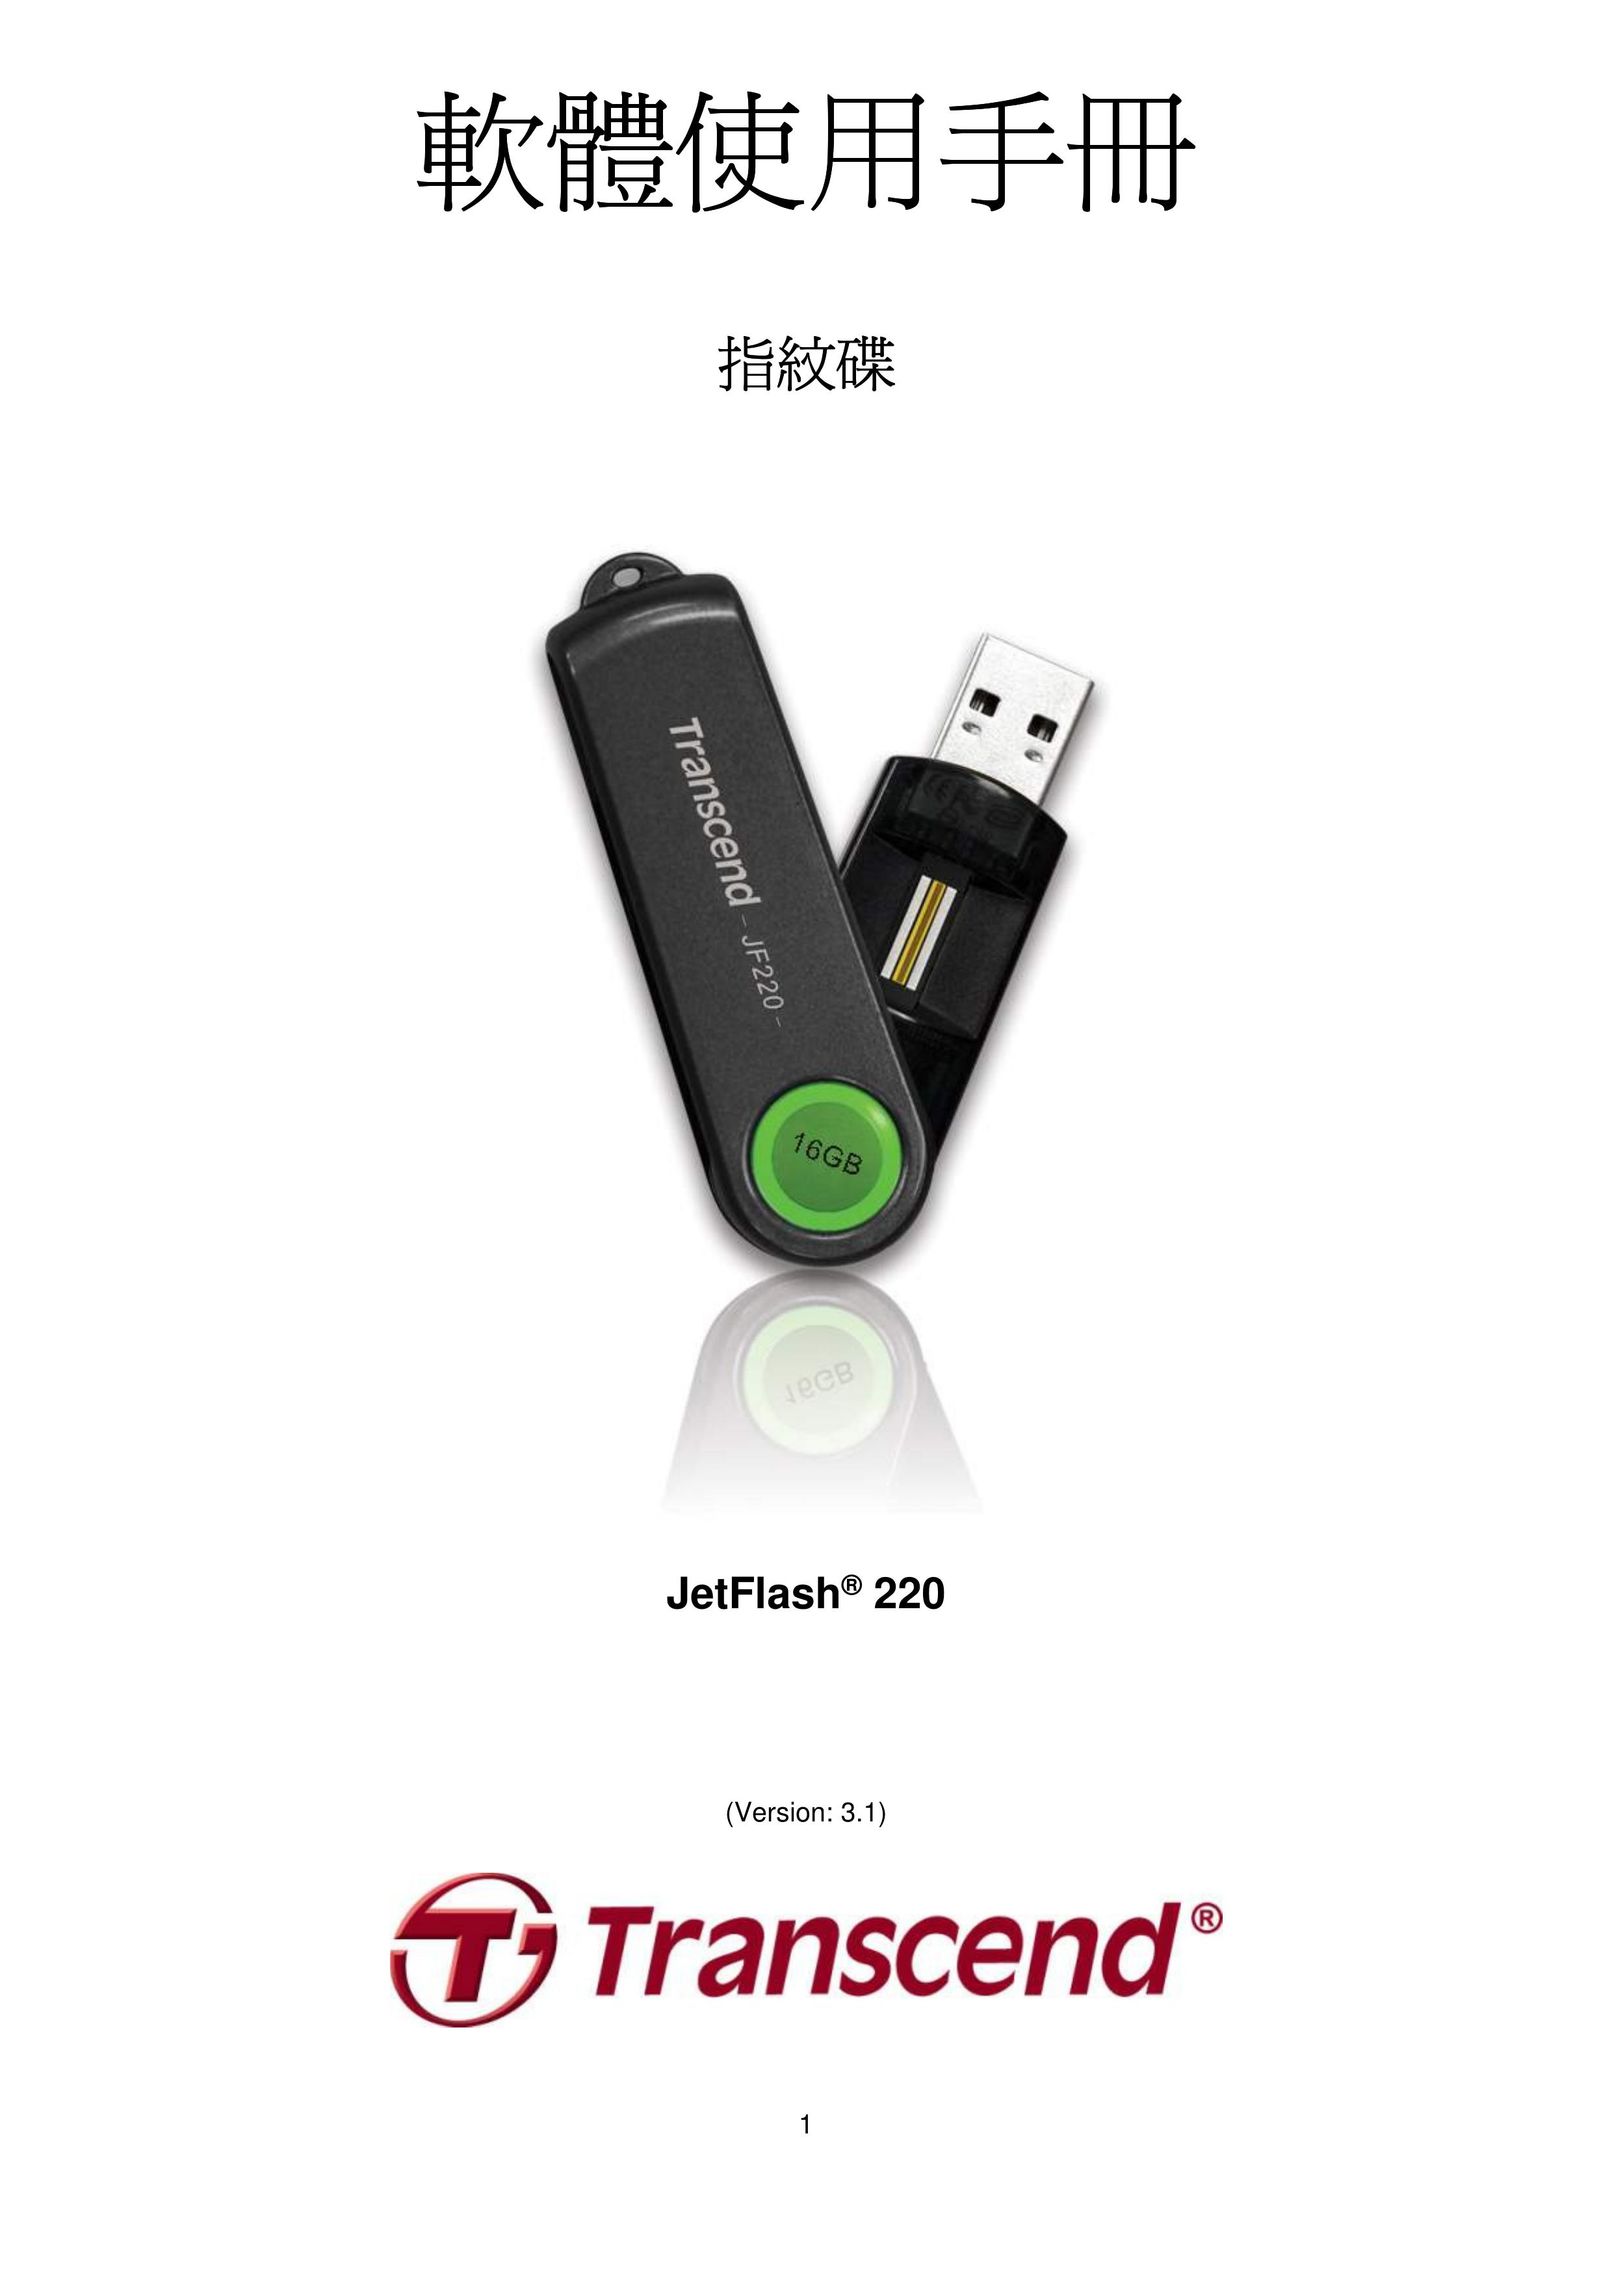 Transcend Information 220 Flash Memory User Manual